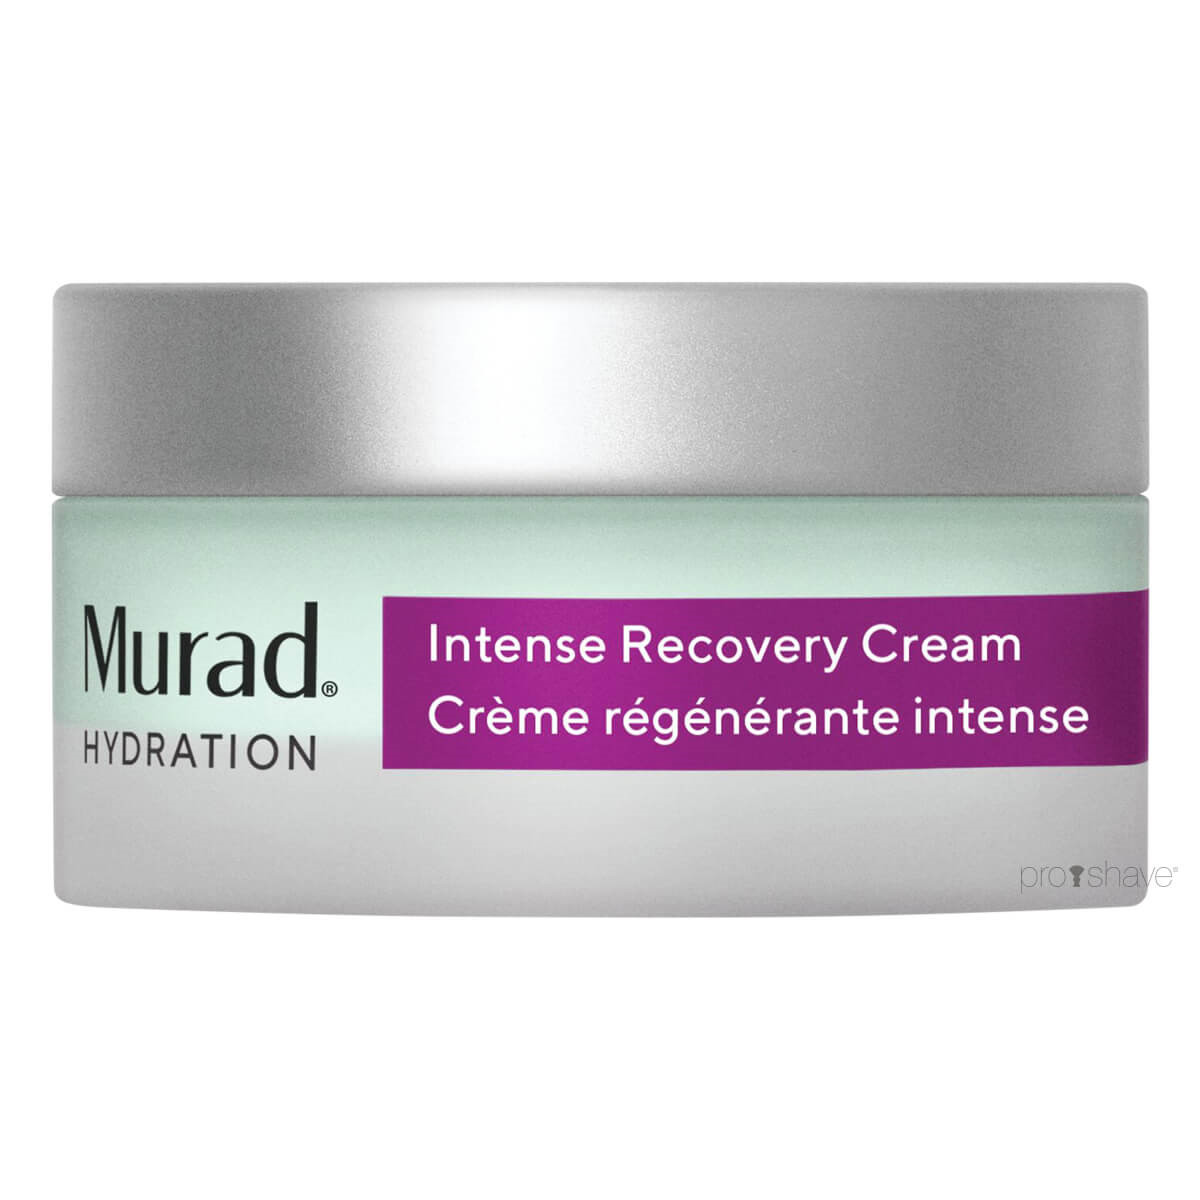 Se Murad Hydration Intense Recovery Cream, Hydration, 50 ml. hos Proshave